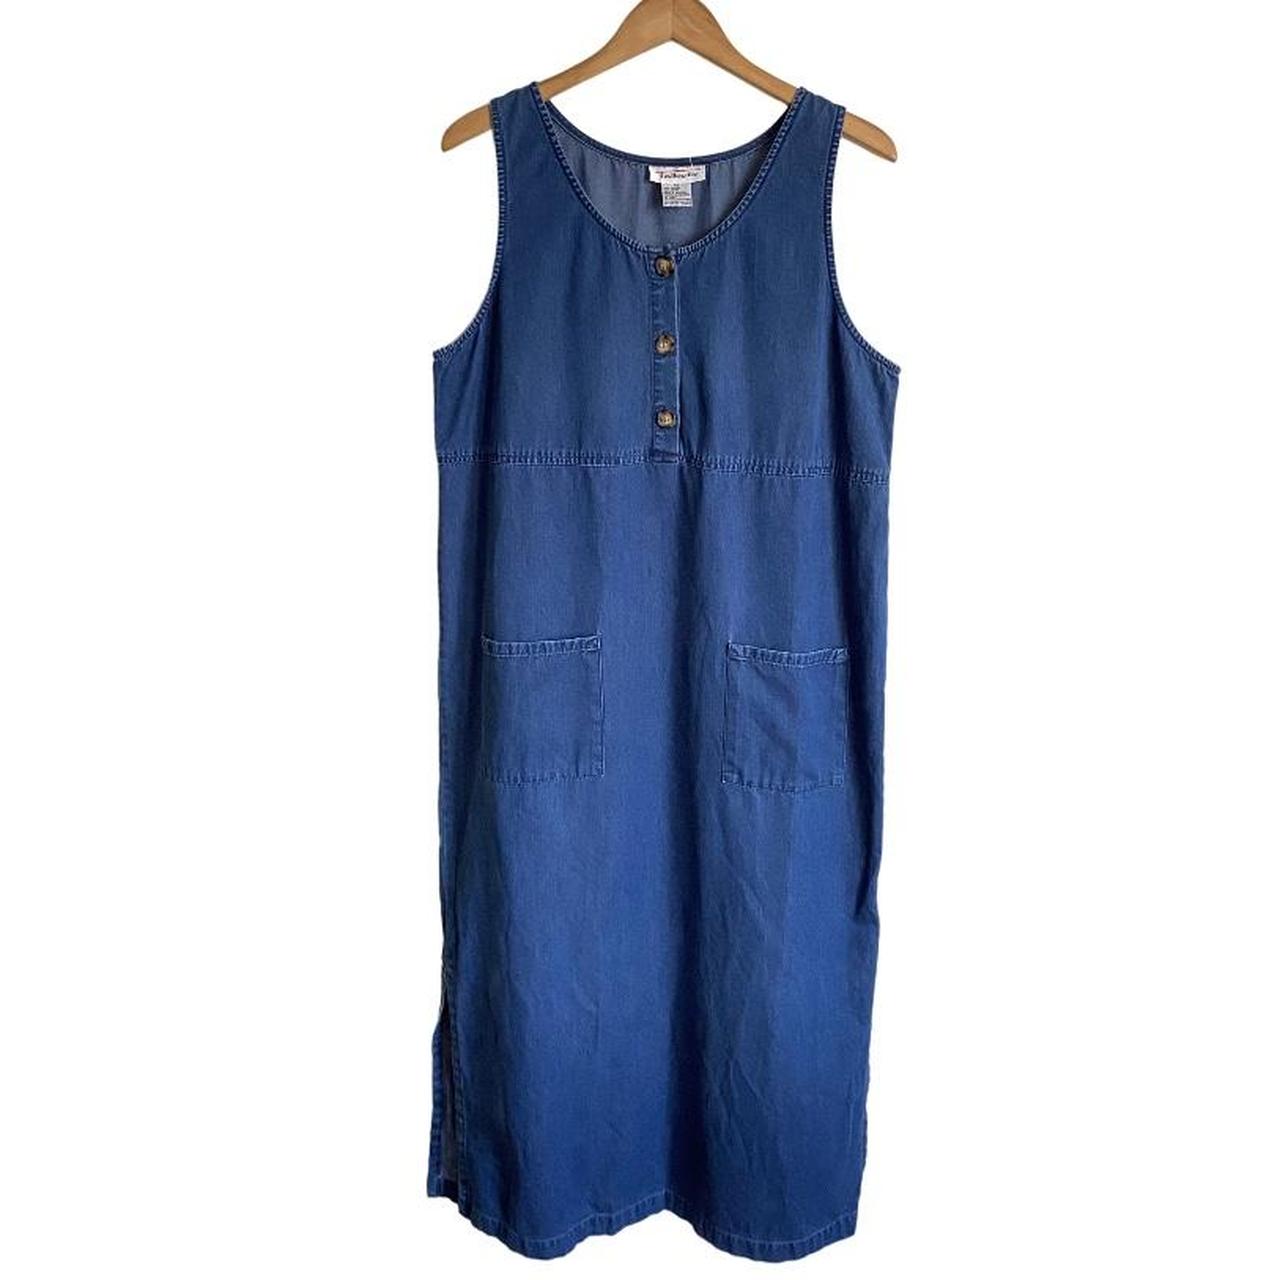 Talbots Women's Blue Dress | Depop